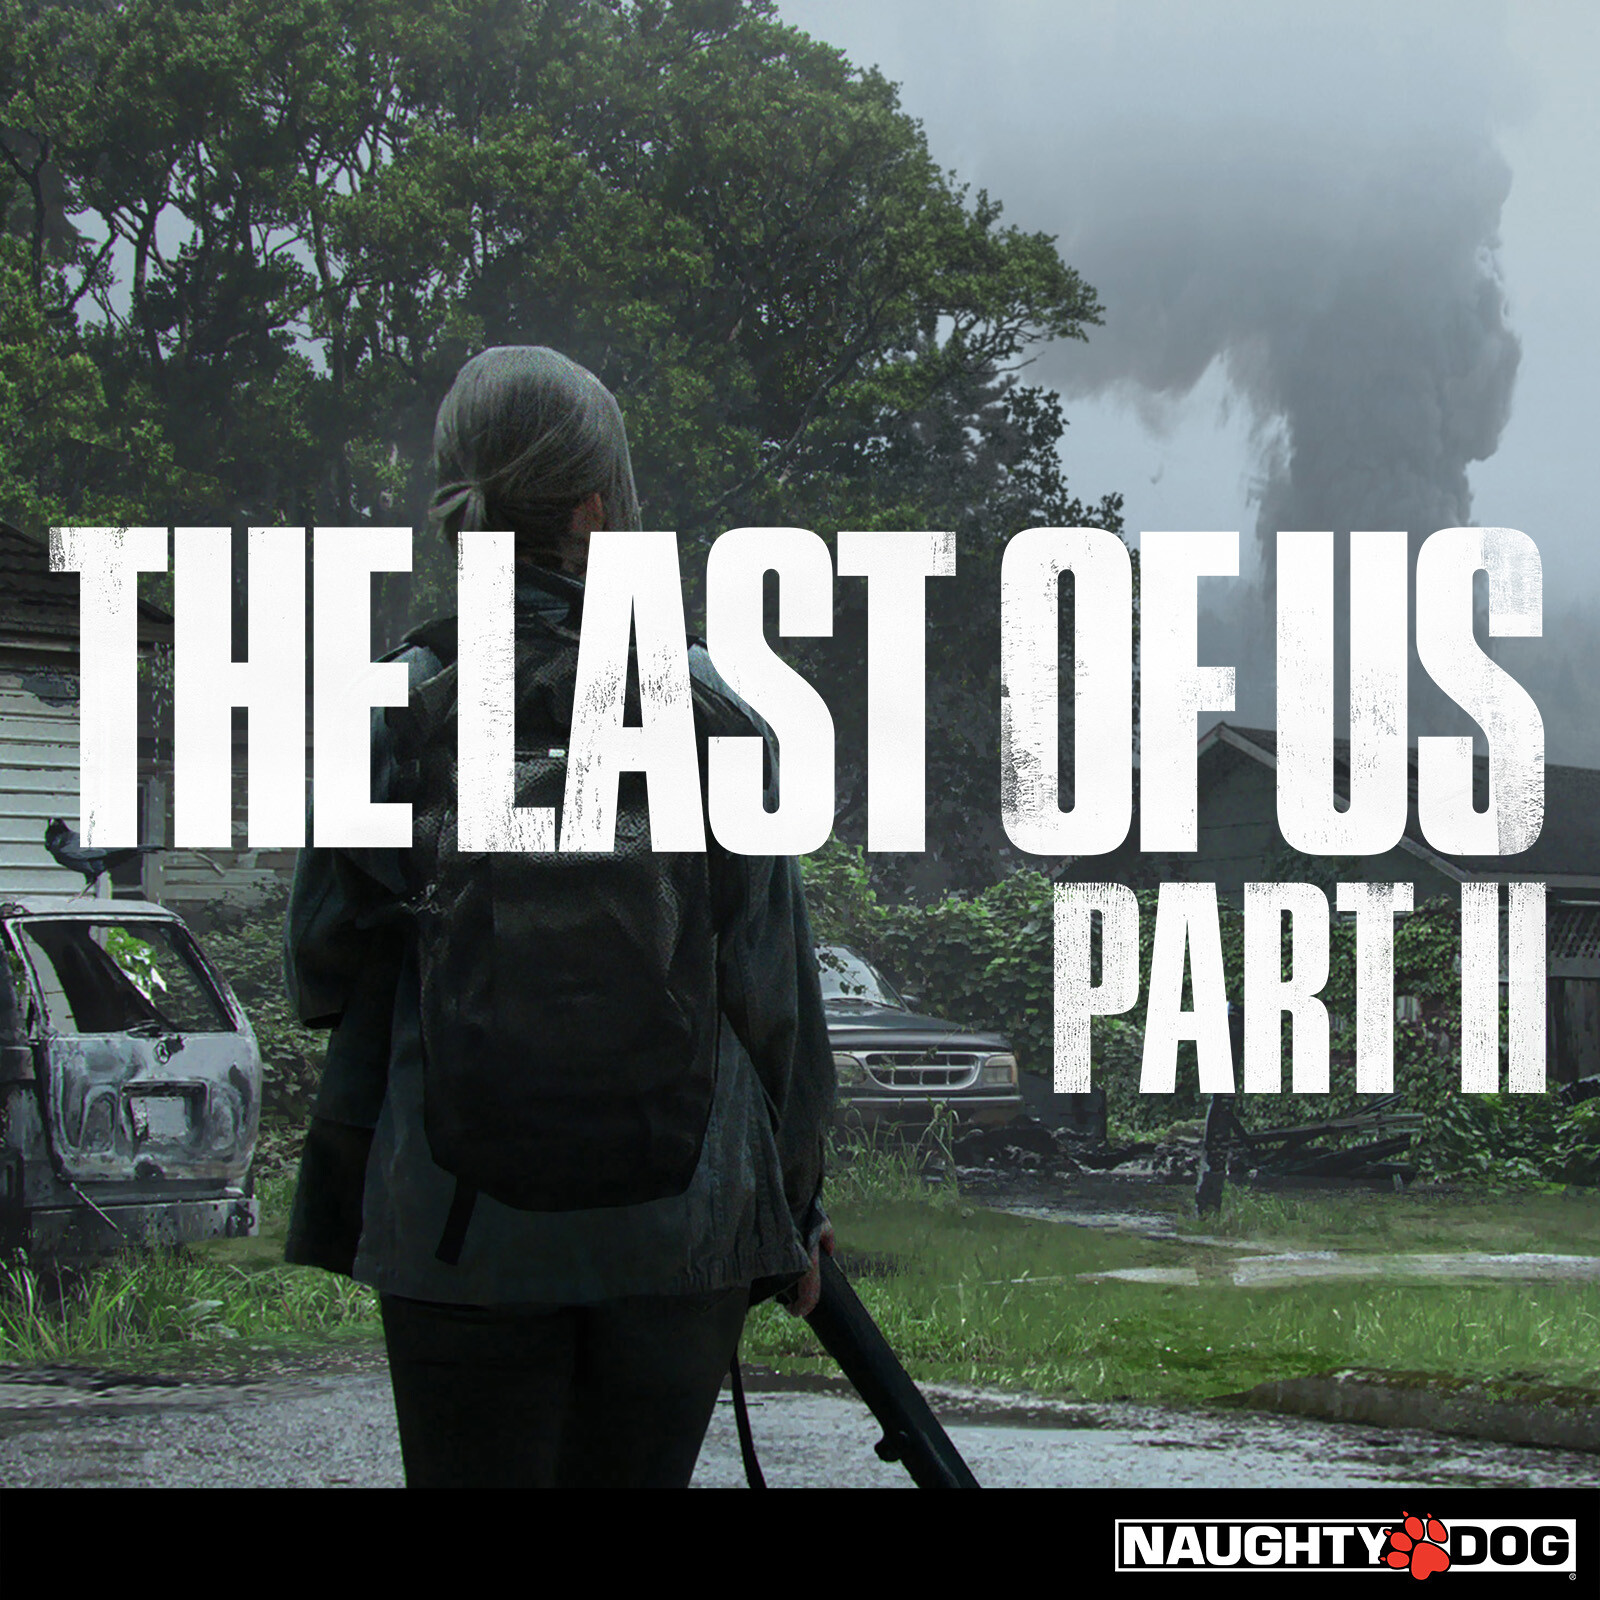 ArtStation - The Last Of Us Part 2 main menu - fanart